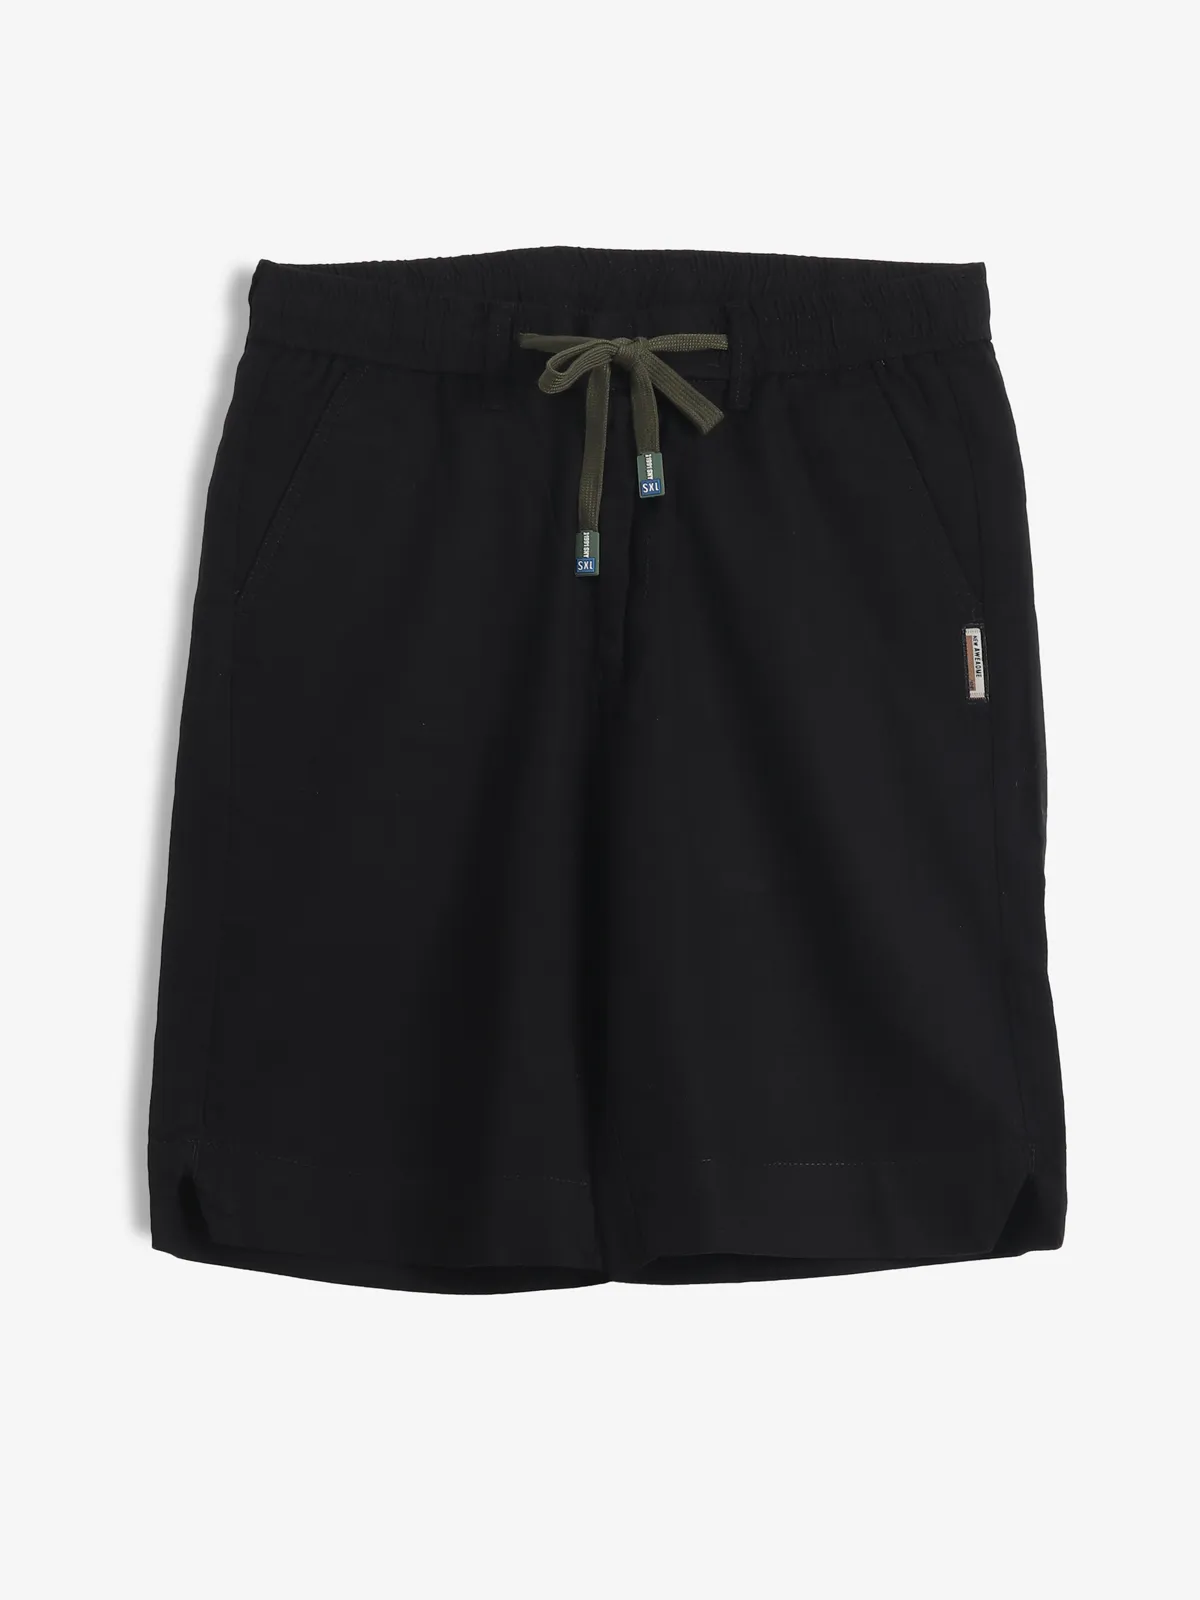 GS78 black cotton solid shorts